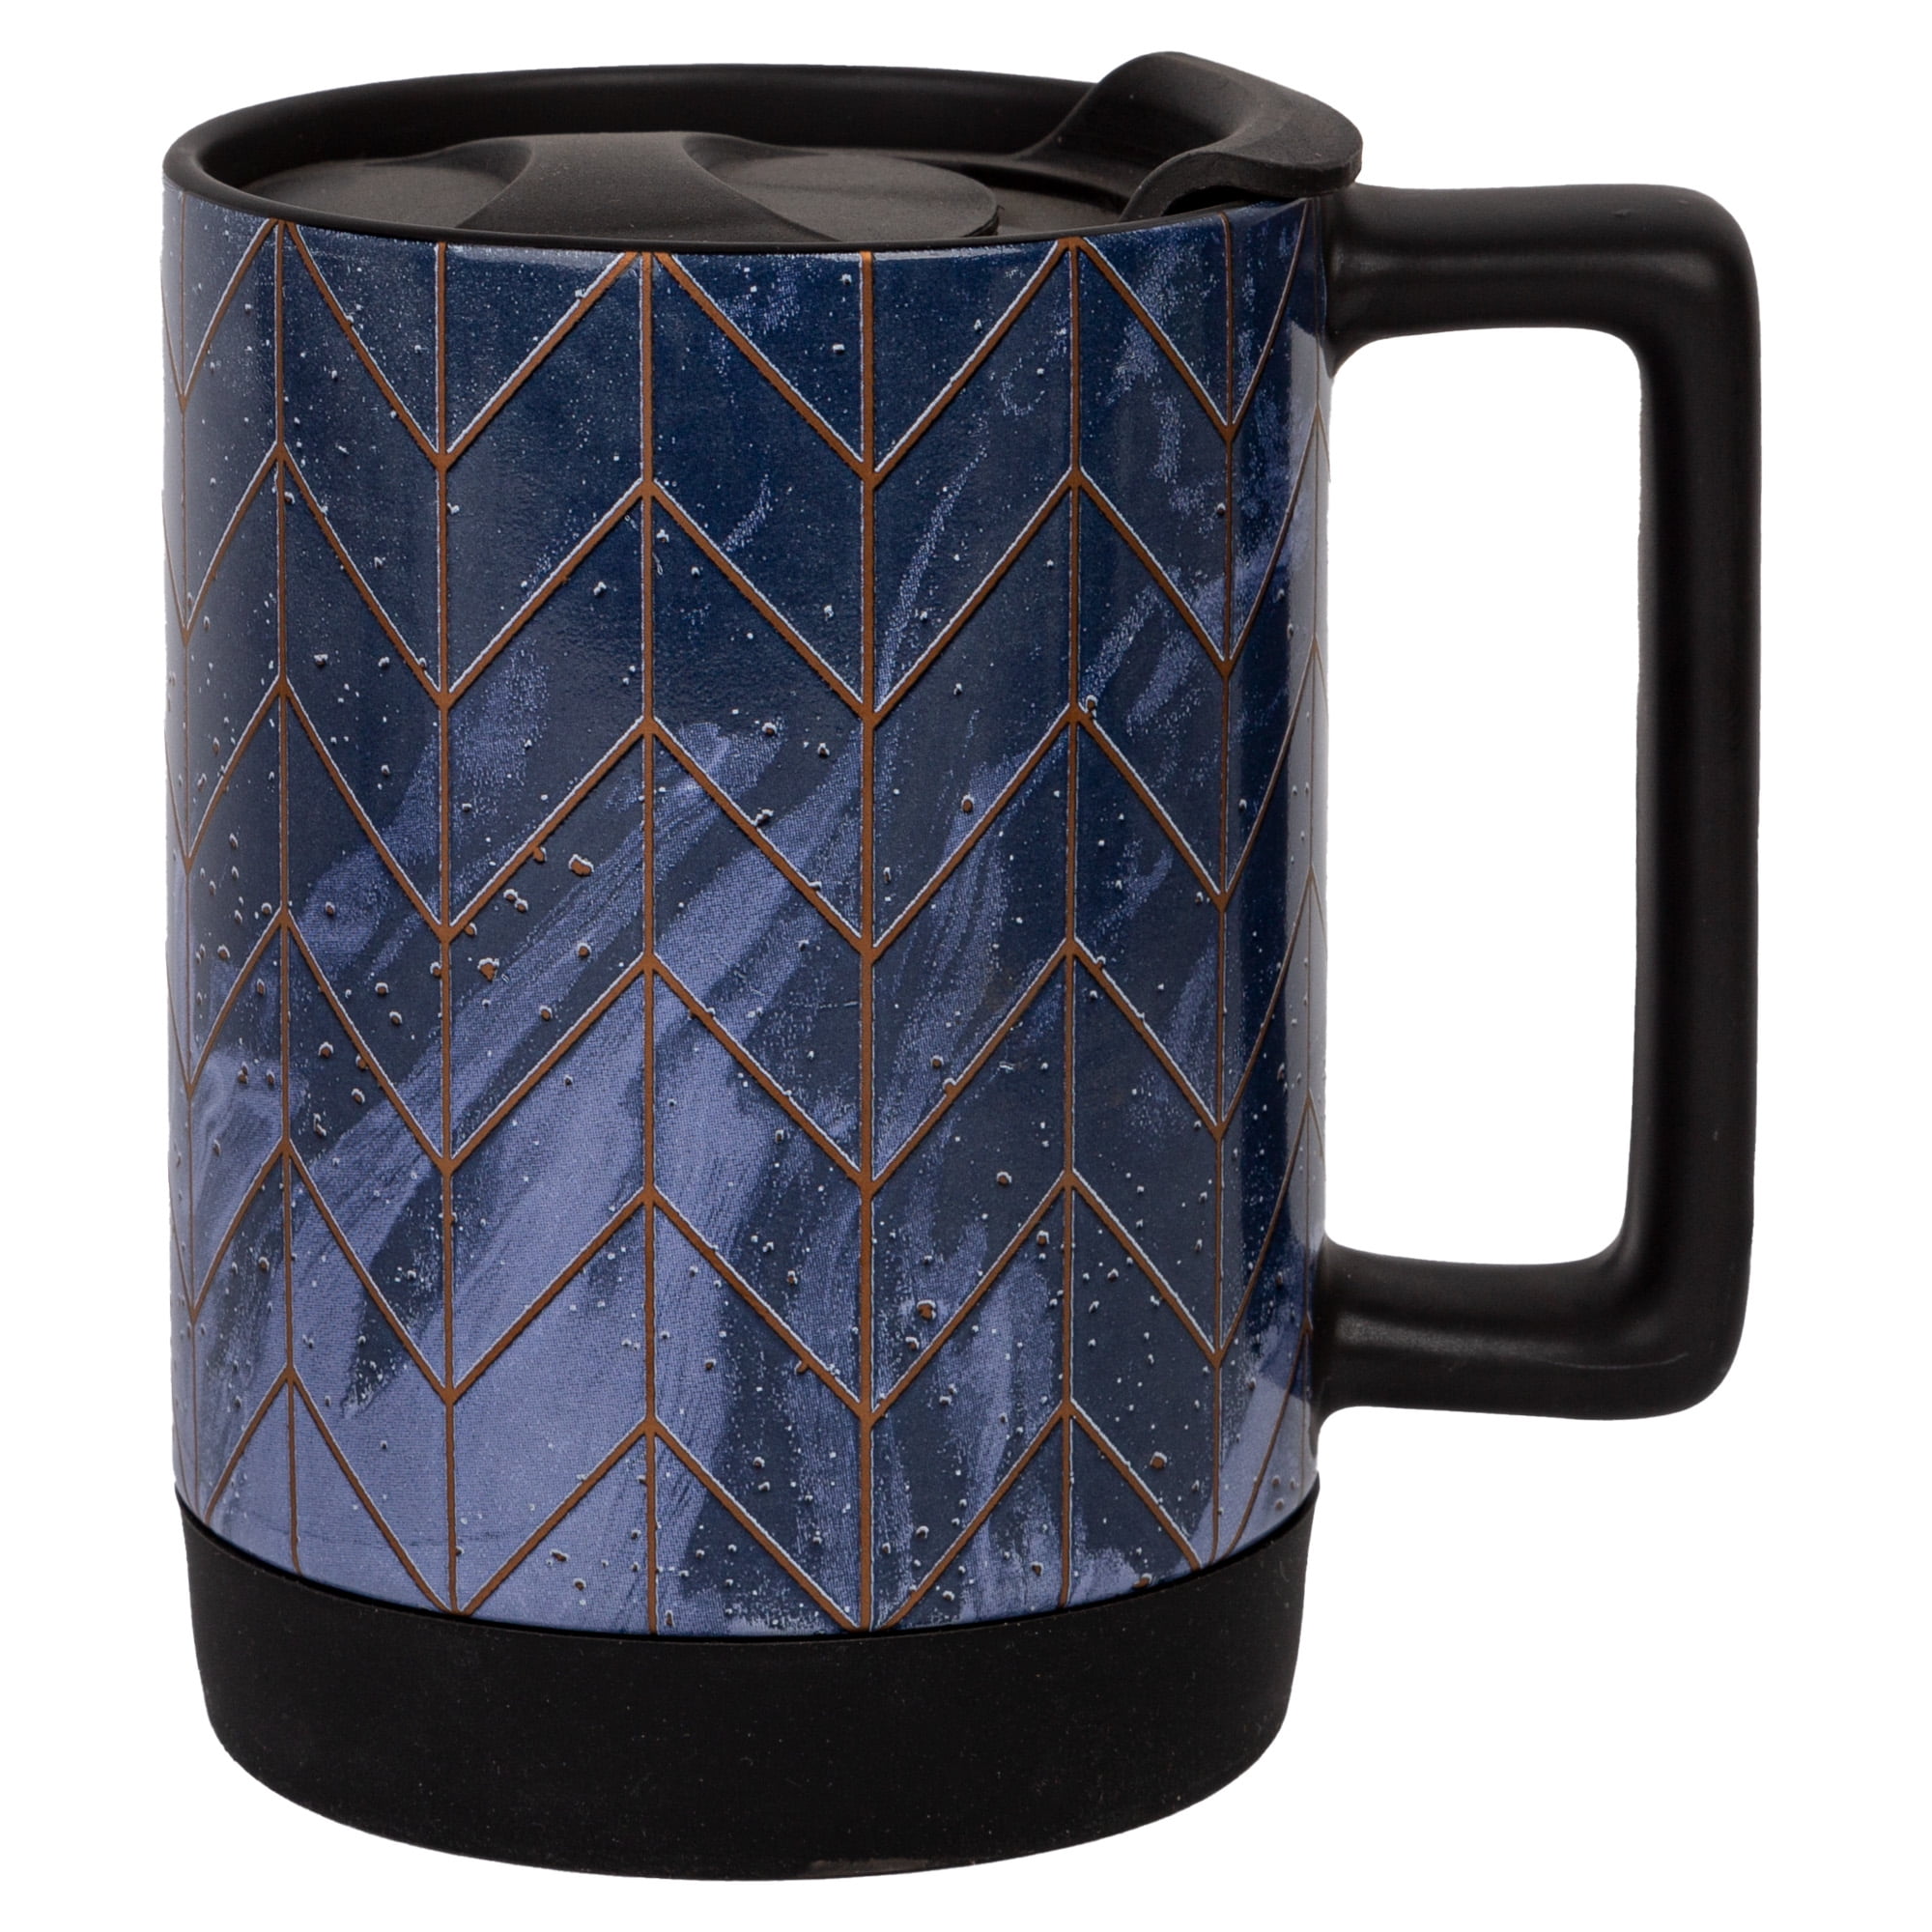 Bluey Ceramic Mug 15oz - Teeholly